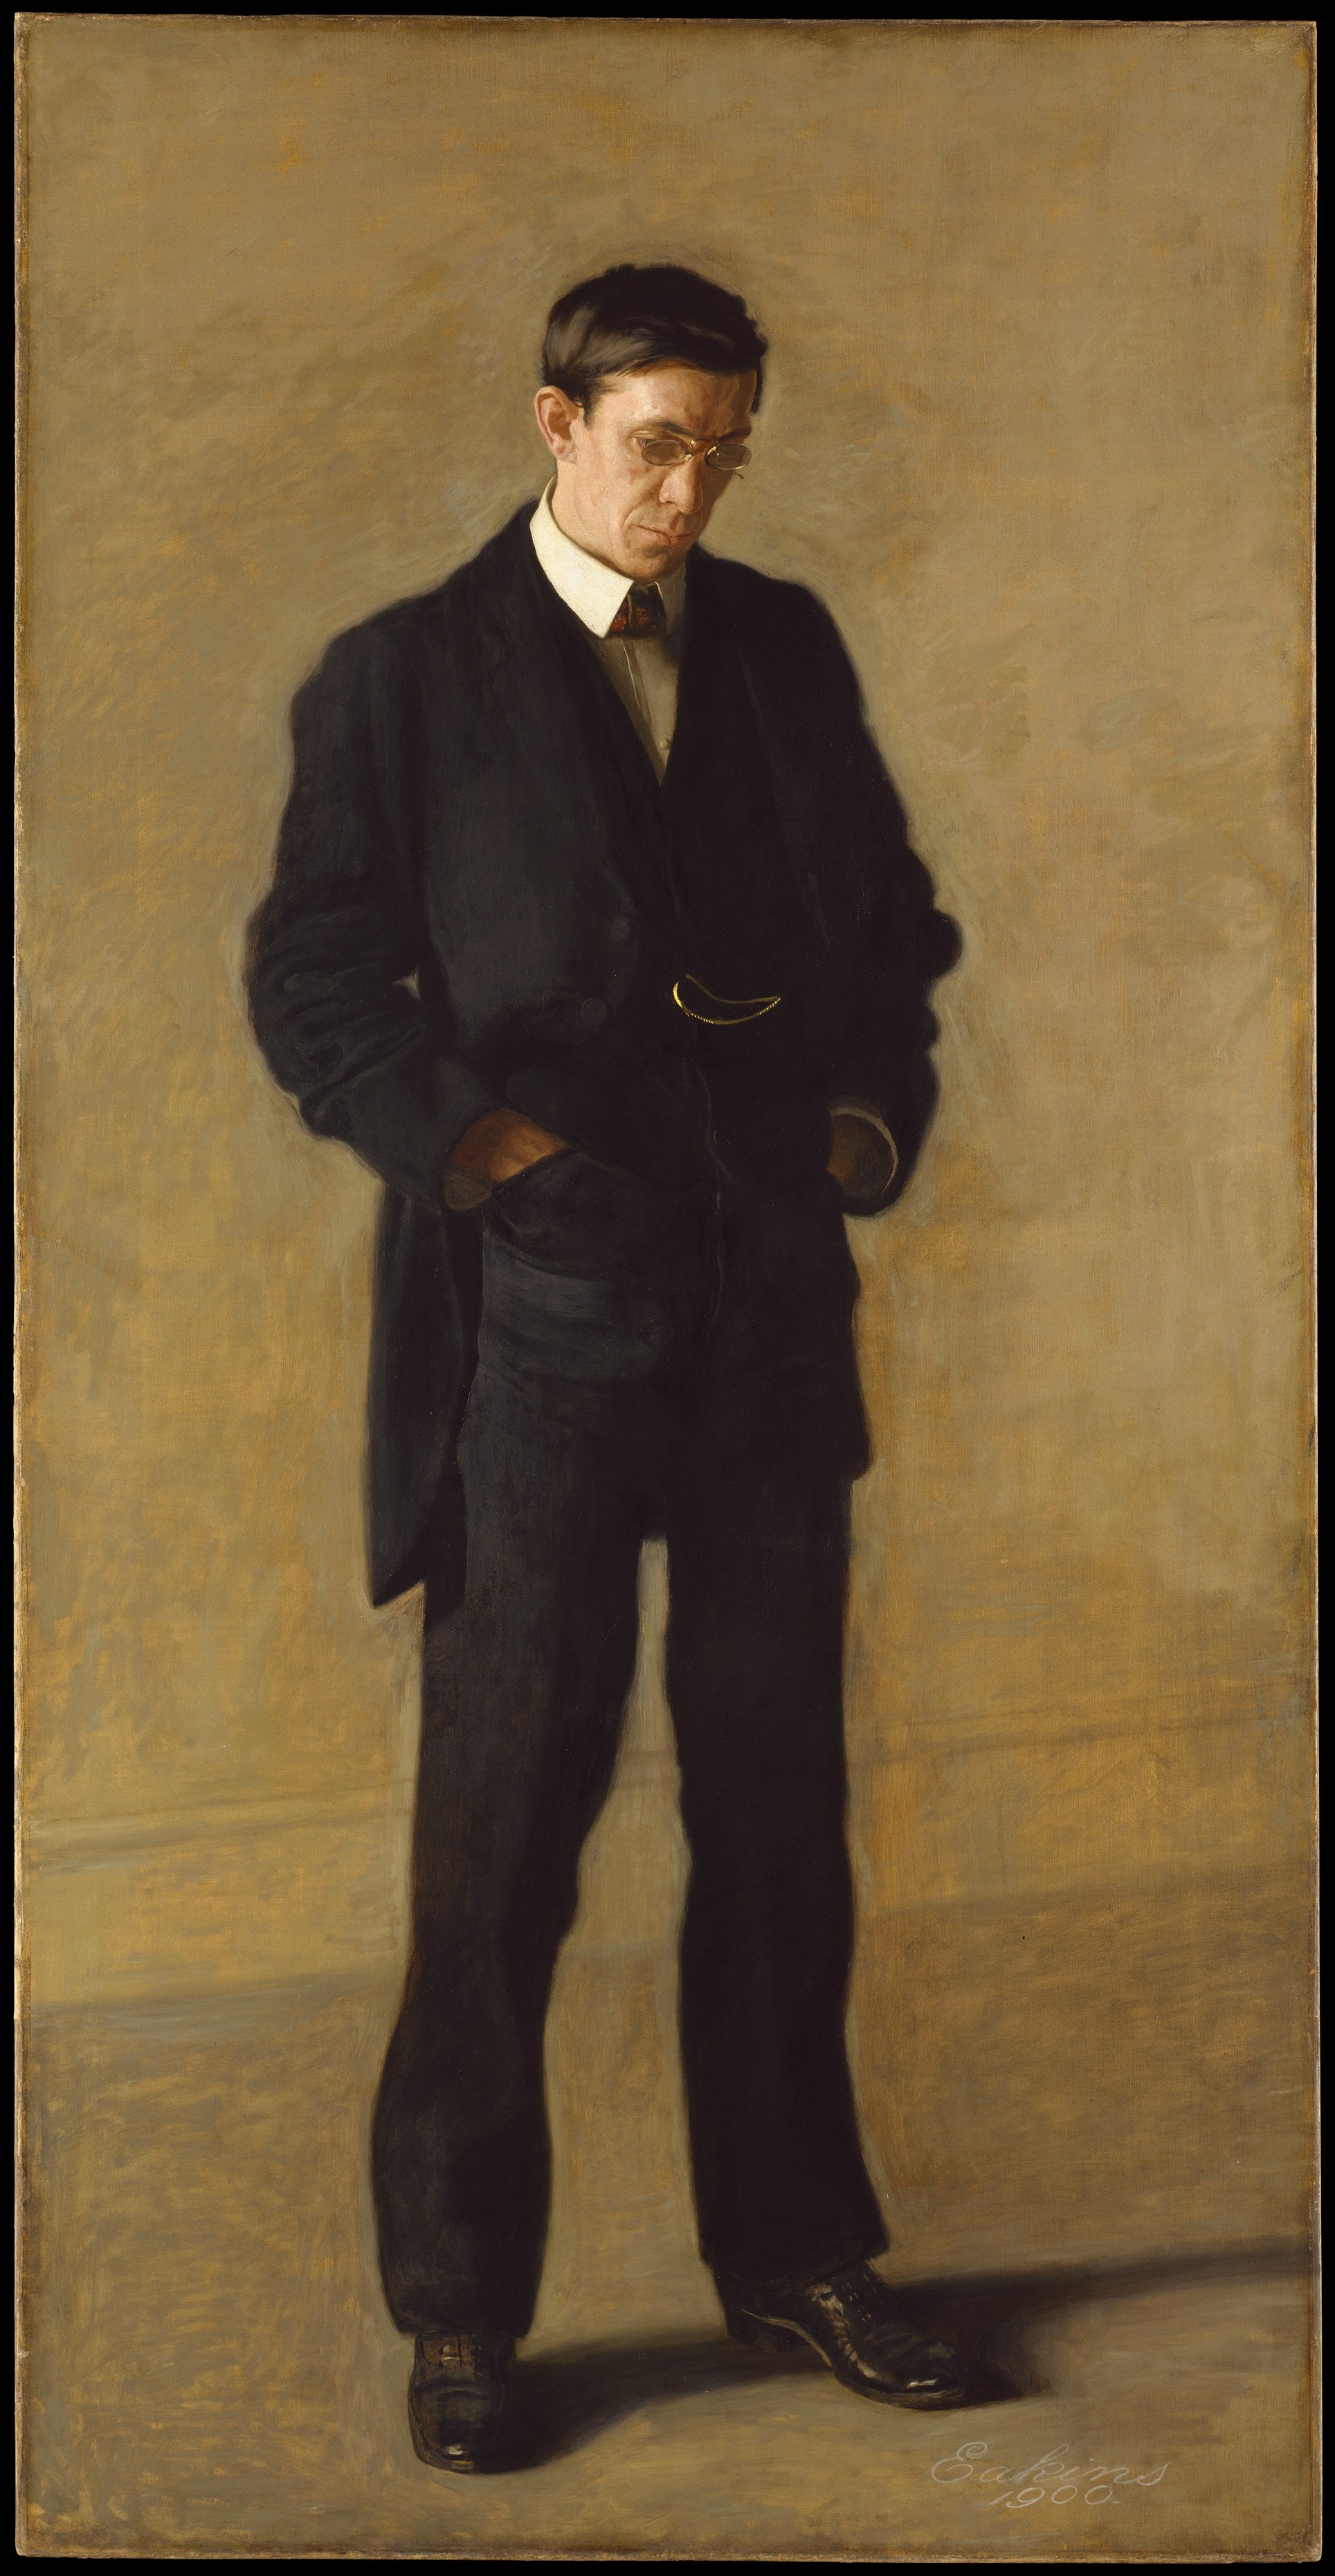 O Pensador: Retrato de Louis N. Kenton by Thomas Eakins - 1900 - 208.3 x 106.7 cm 